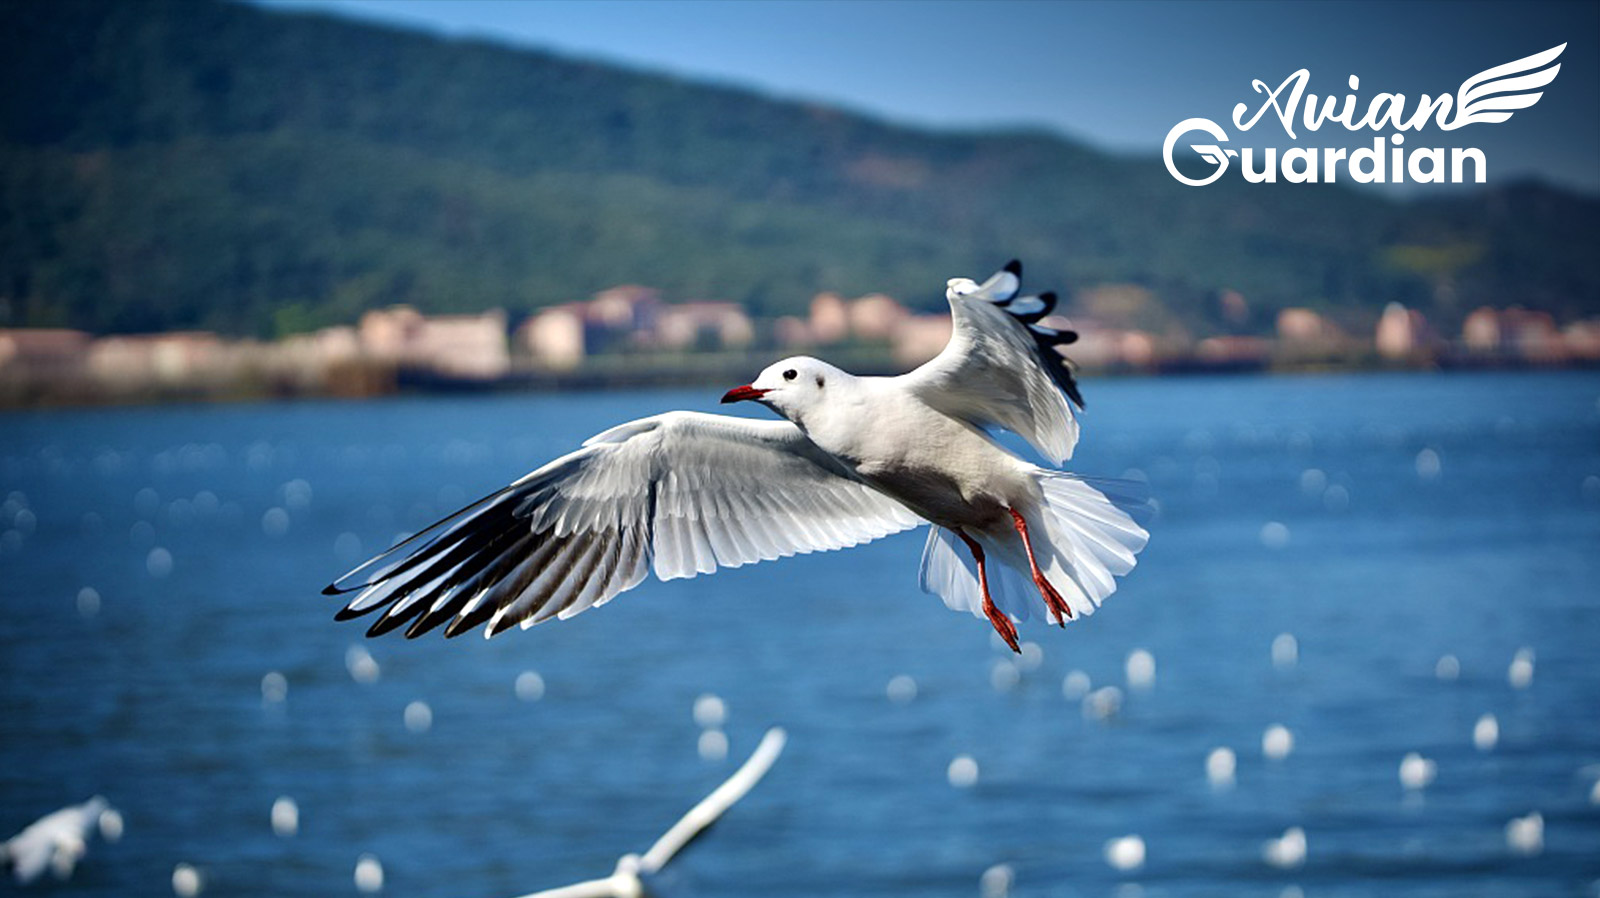 Avian Guardian: Welcome back to Kunming, black-headed gulls